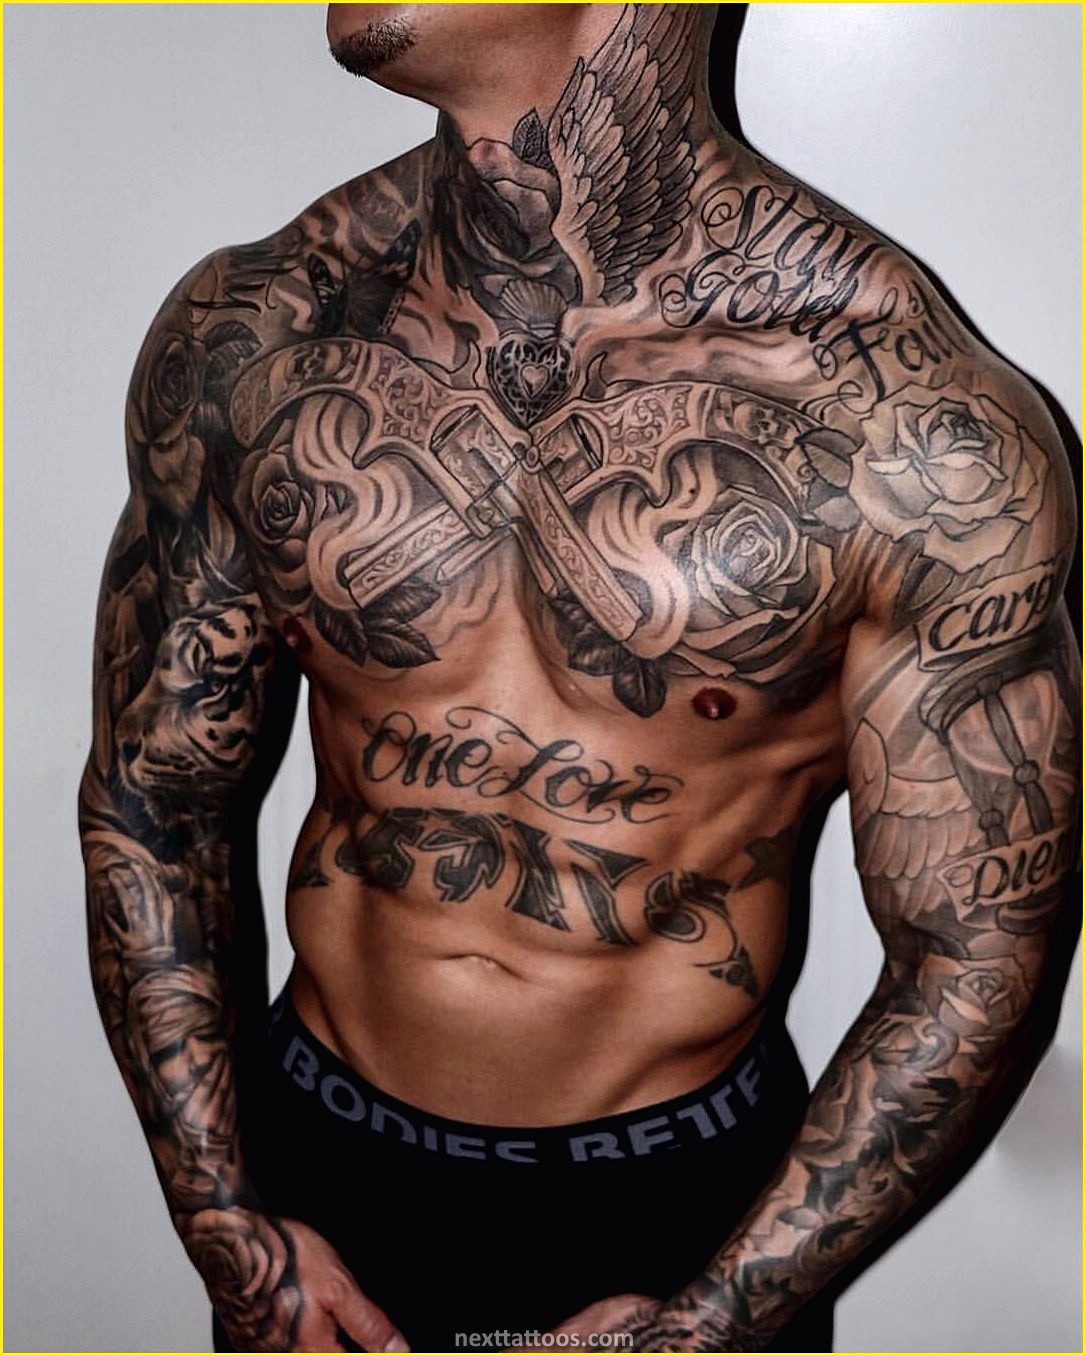 Black Male Neck Tattoos